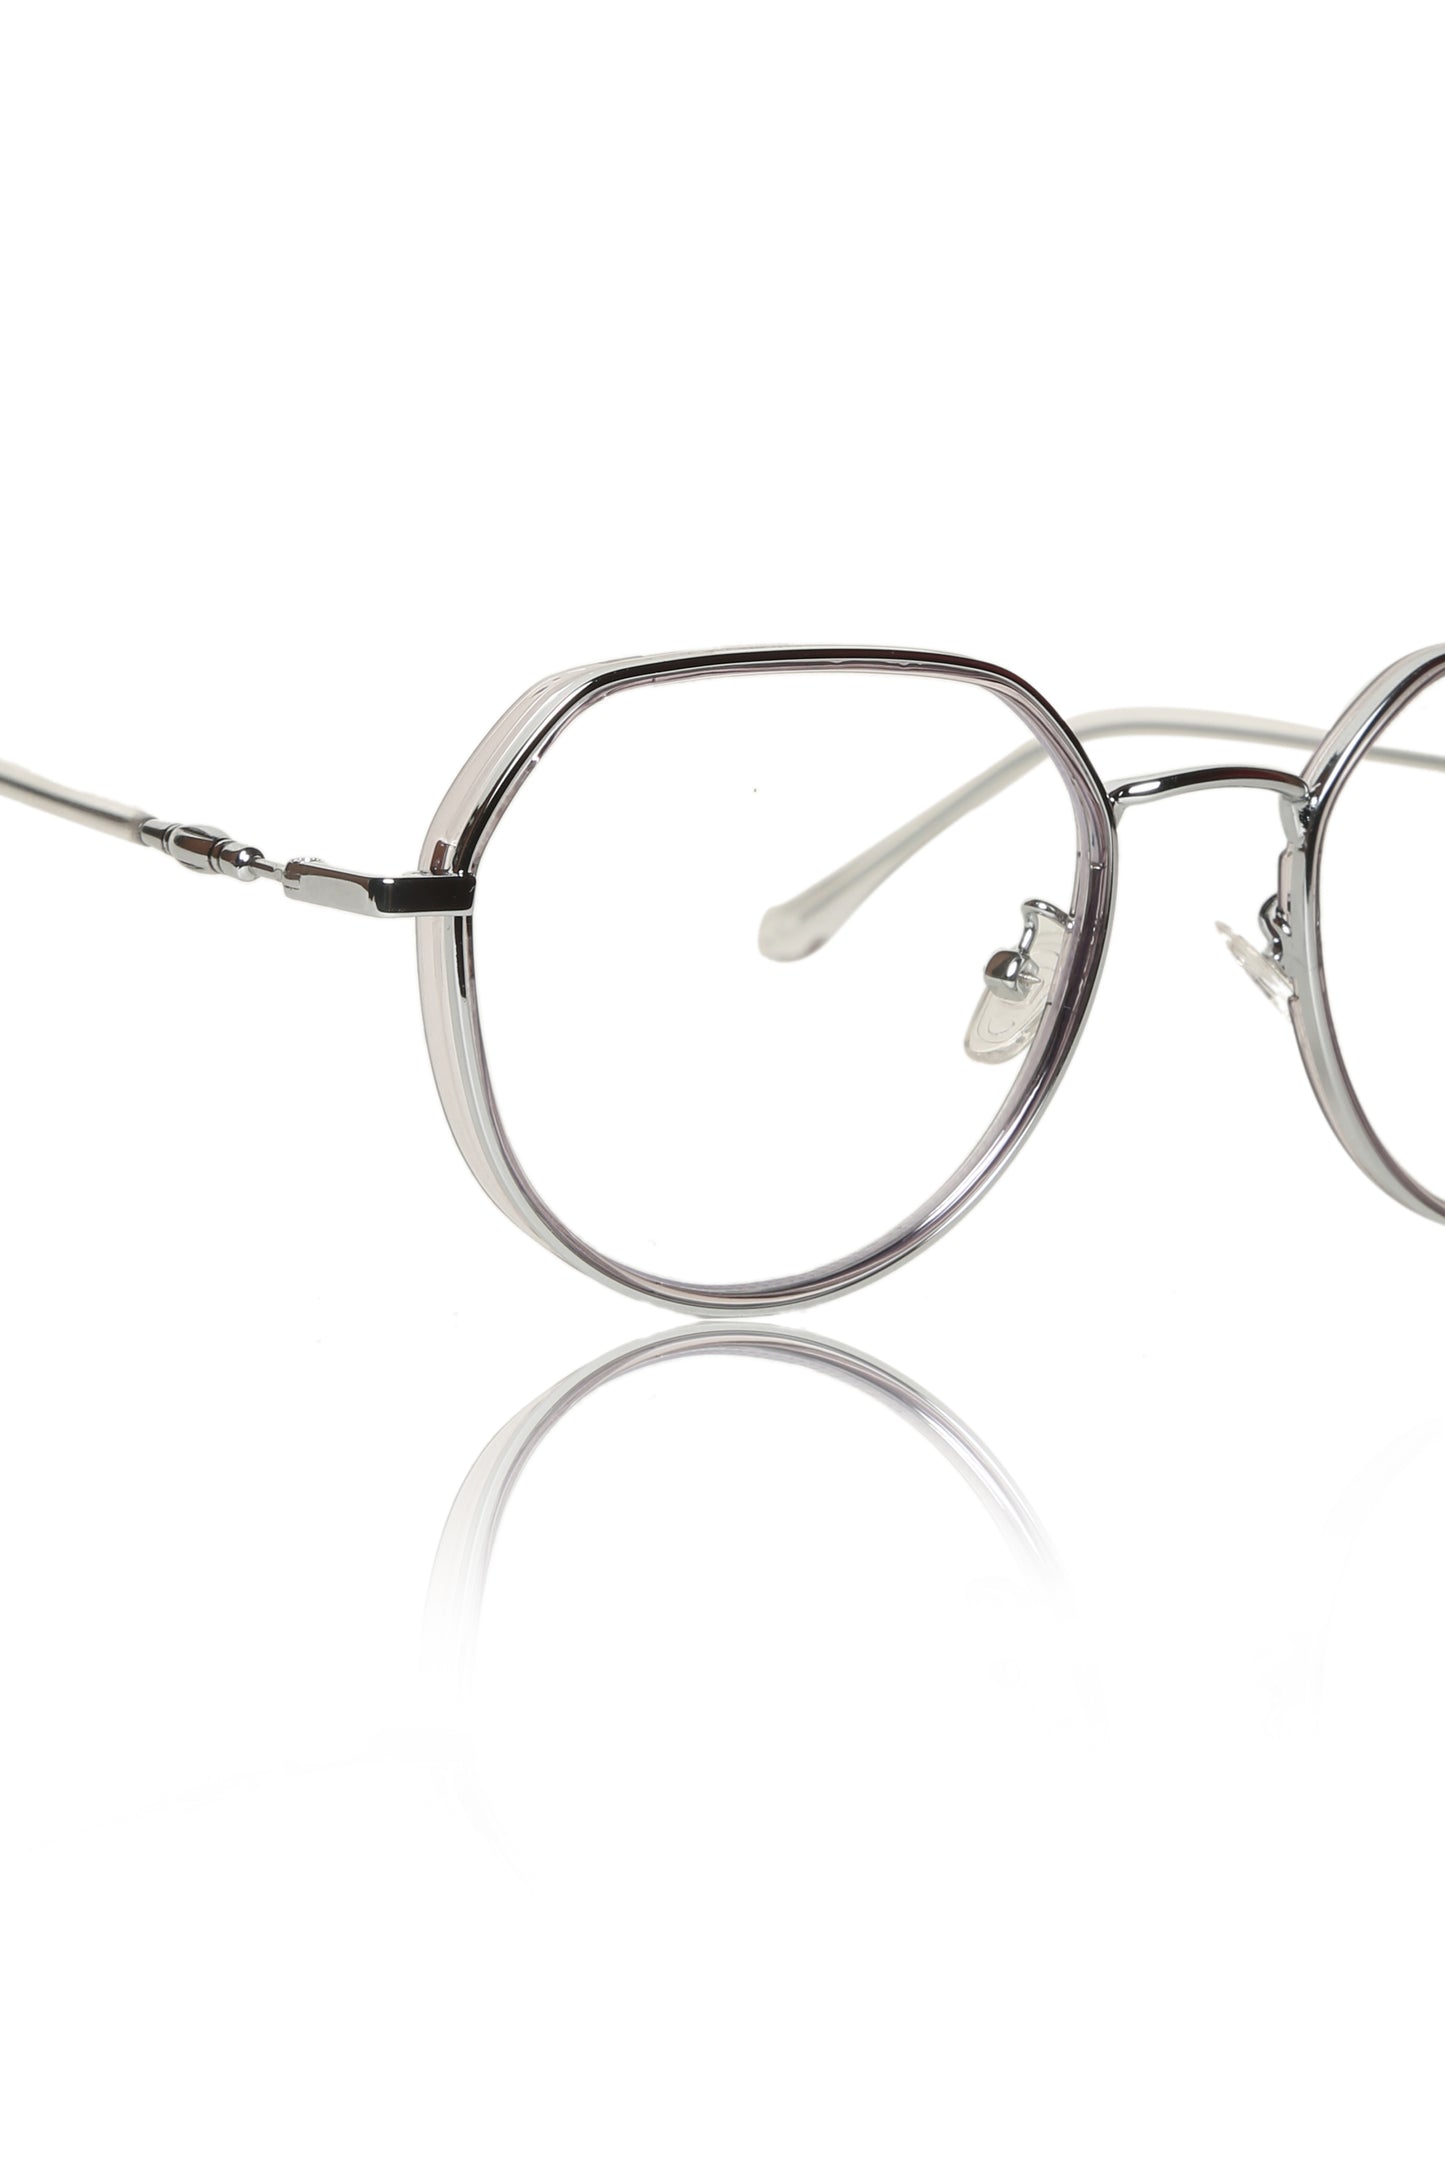 Jodykoes® Premium Series Round-Flat Top Eyewear Eyeglasses Spectacles Frame for Men and Women (Transparent)